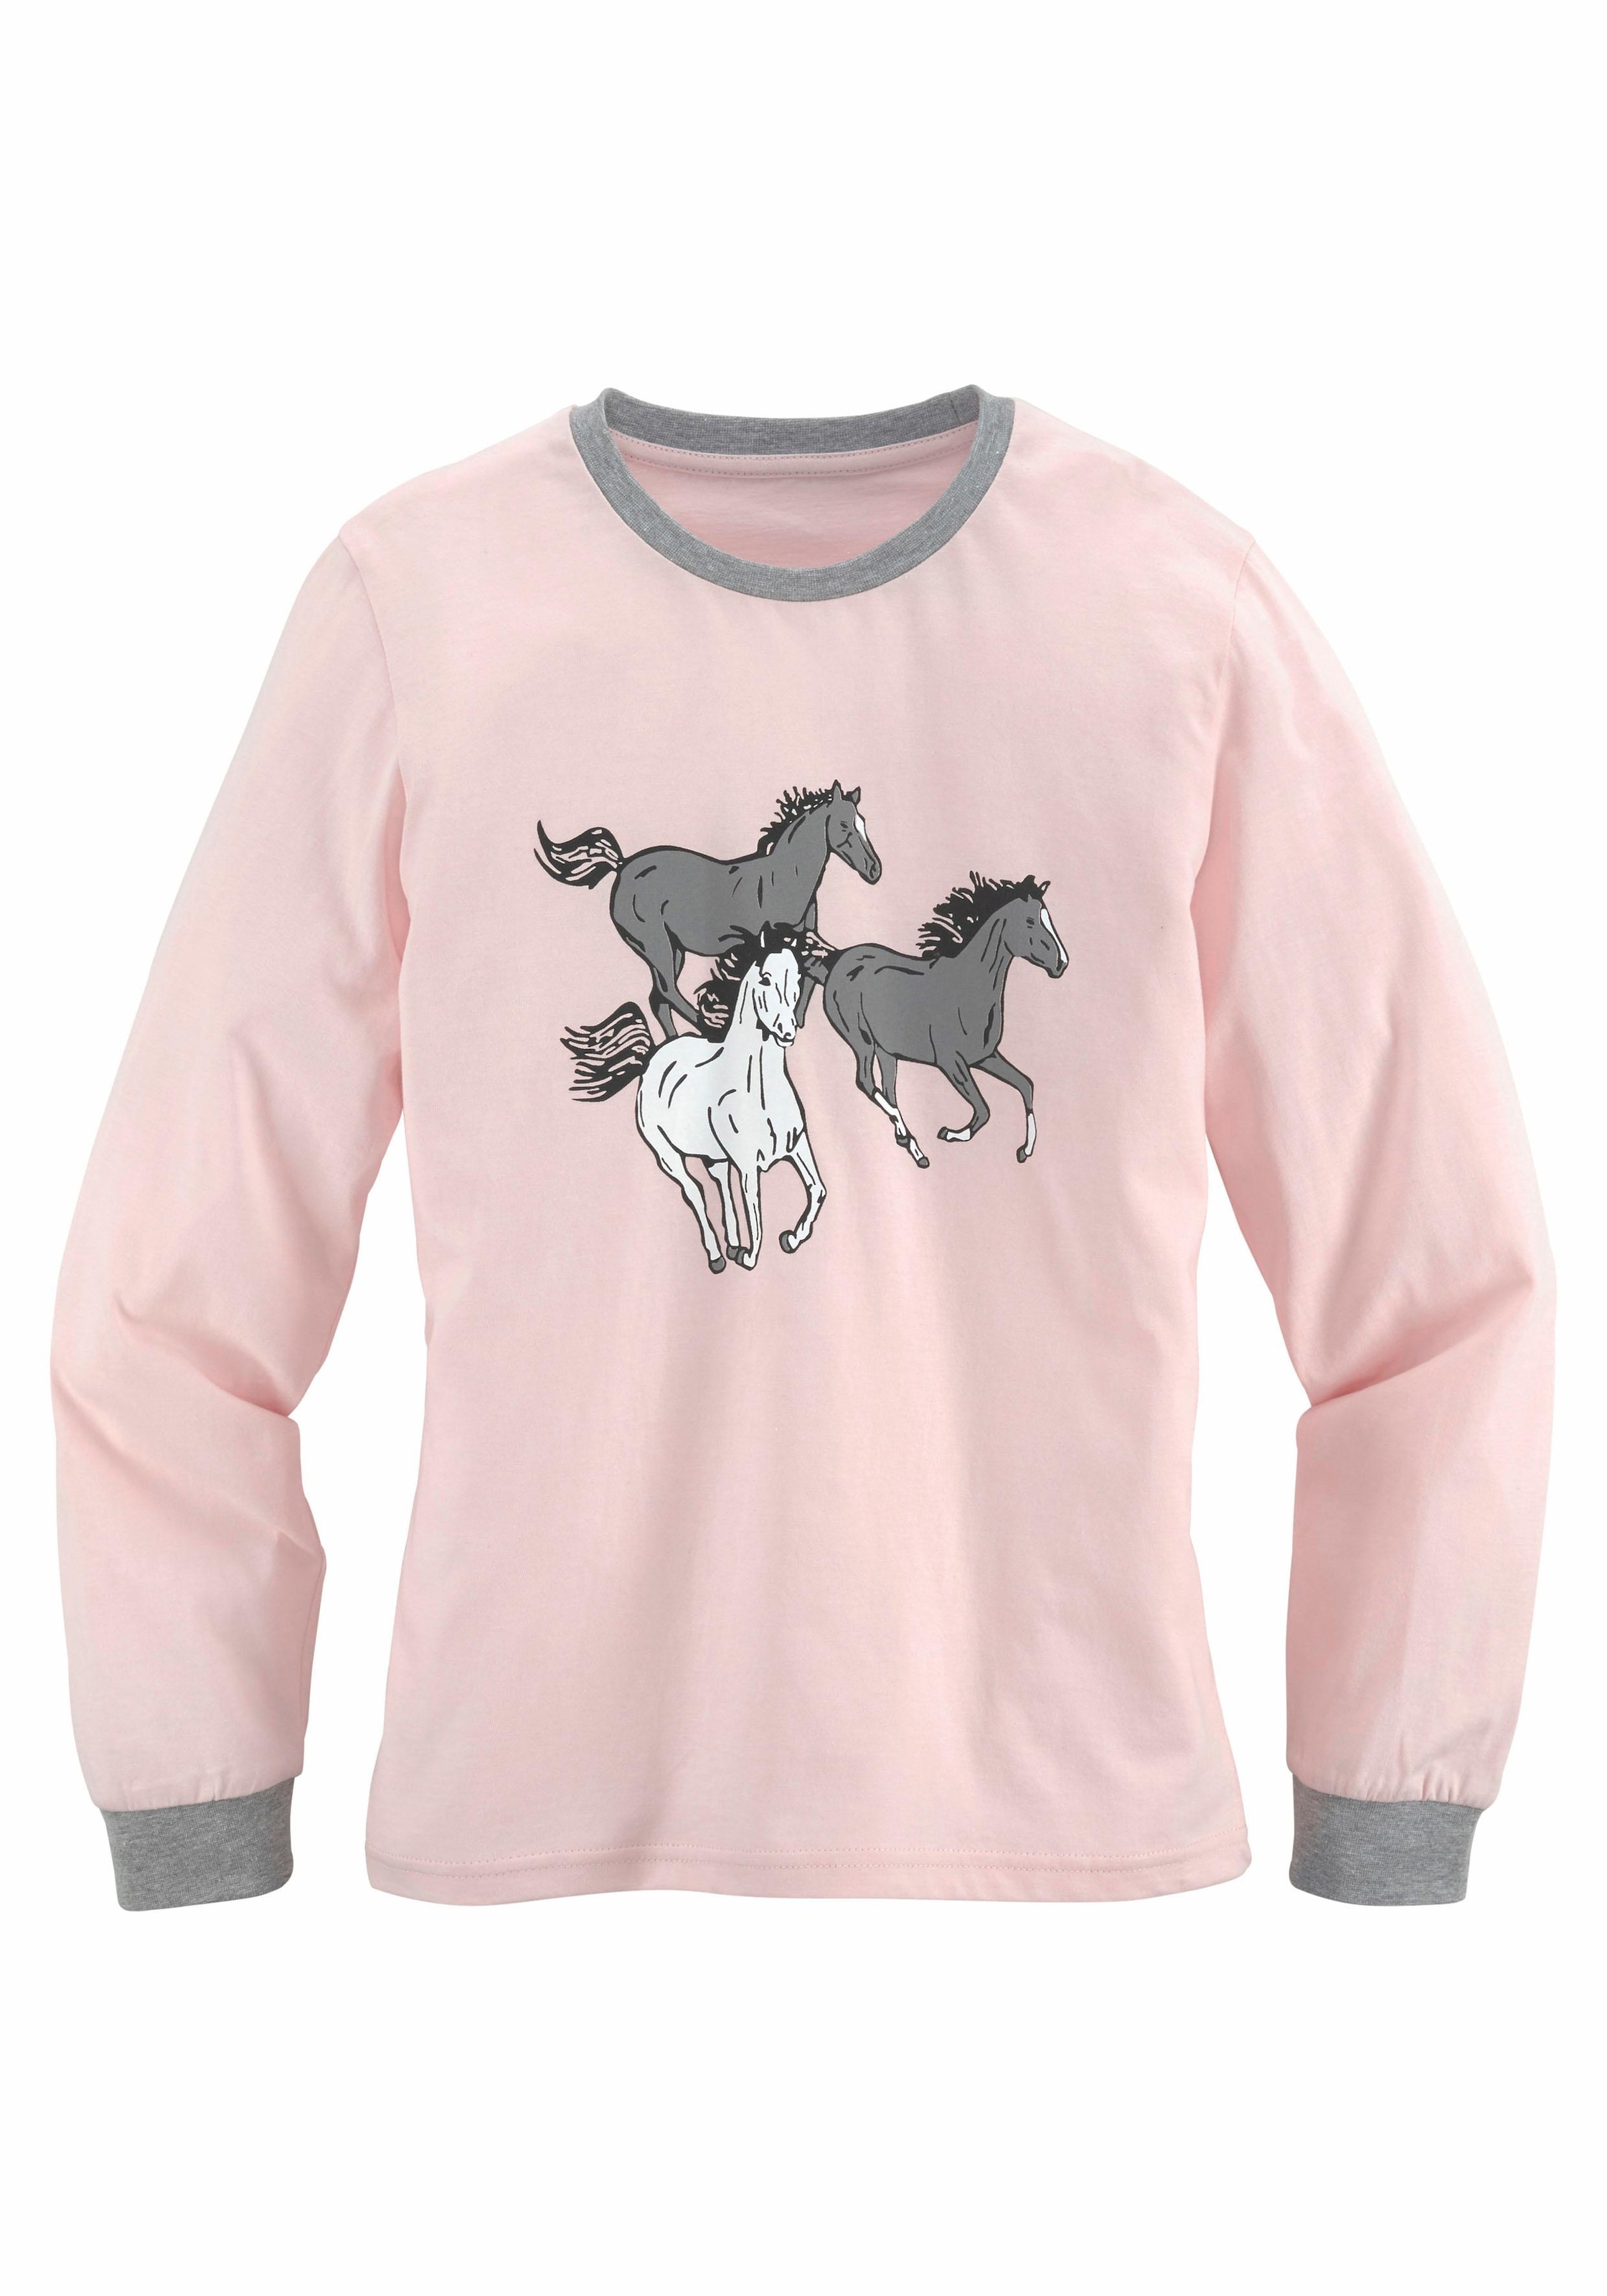 Pferde (2 Stück), petite in Print ♕ Pyjama, langer mit 1 tlg., bei Form fleur